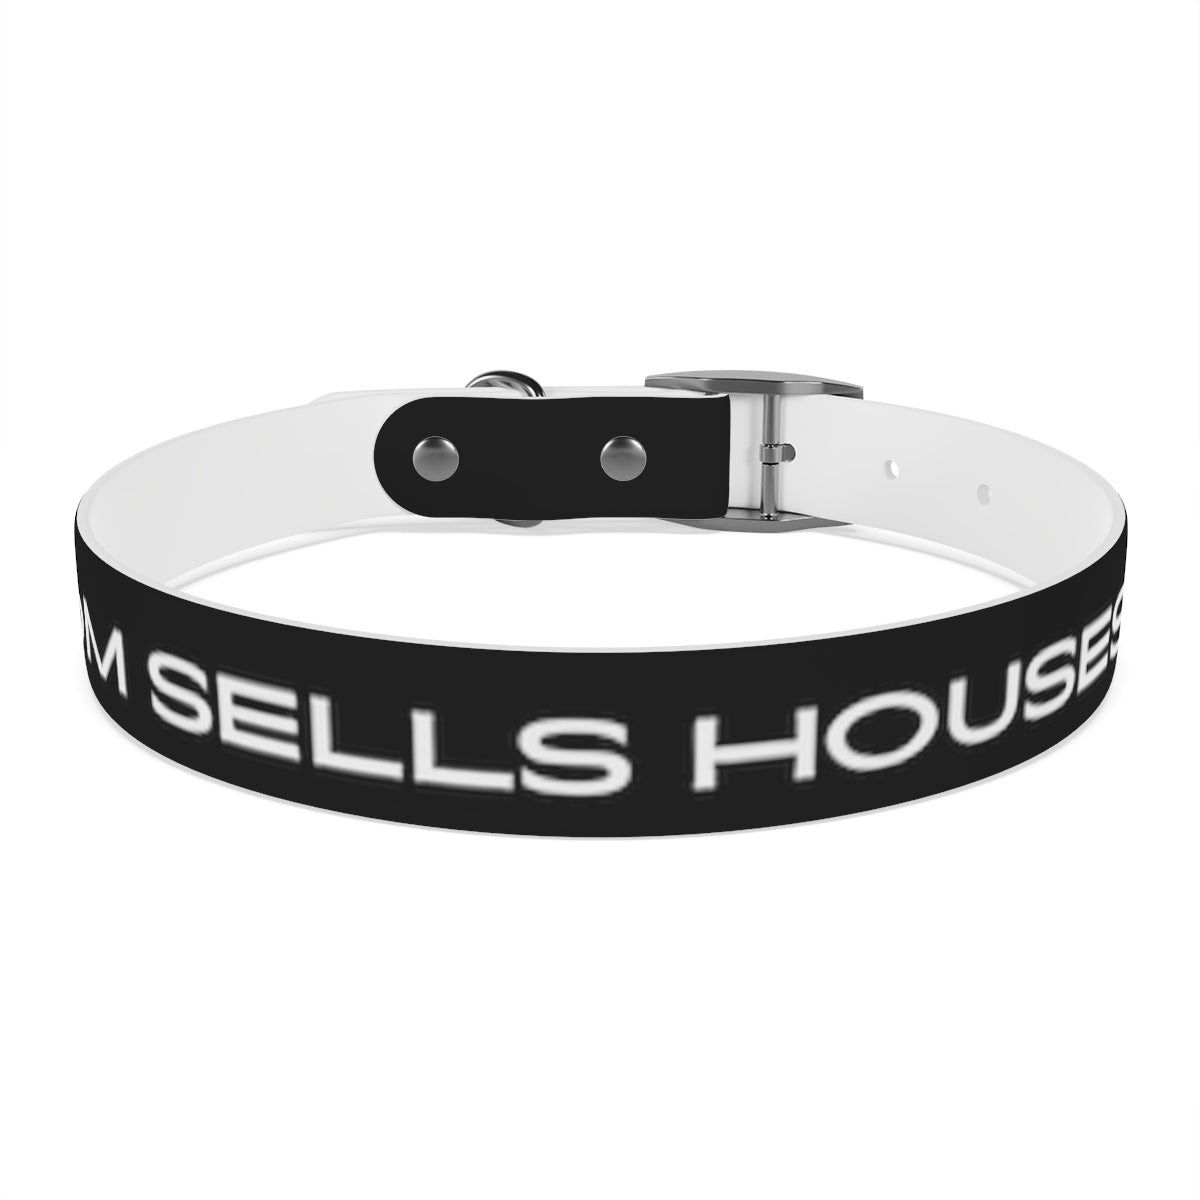 Dog Collar - My Mom Sells Houses - Black